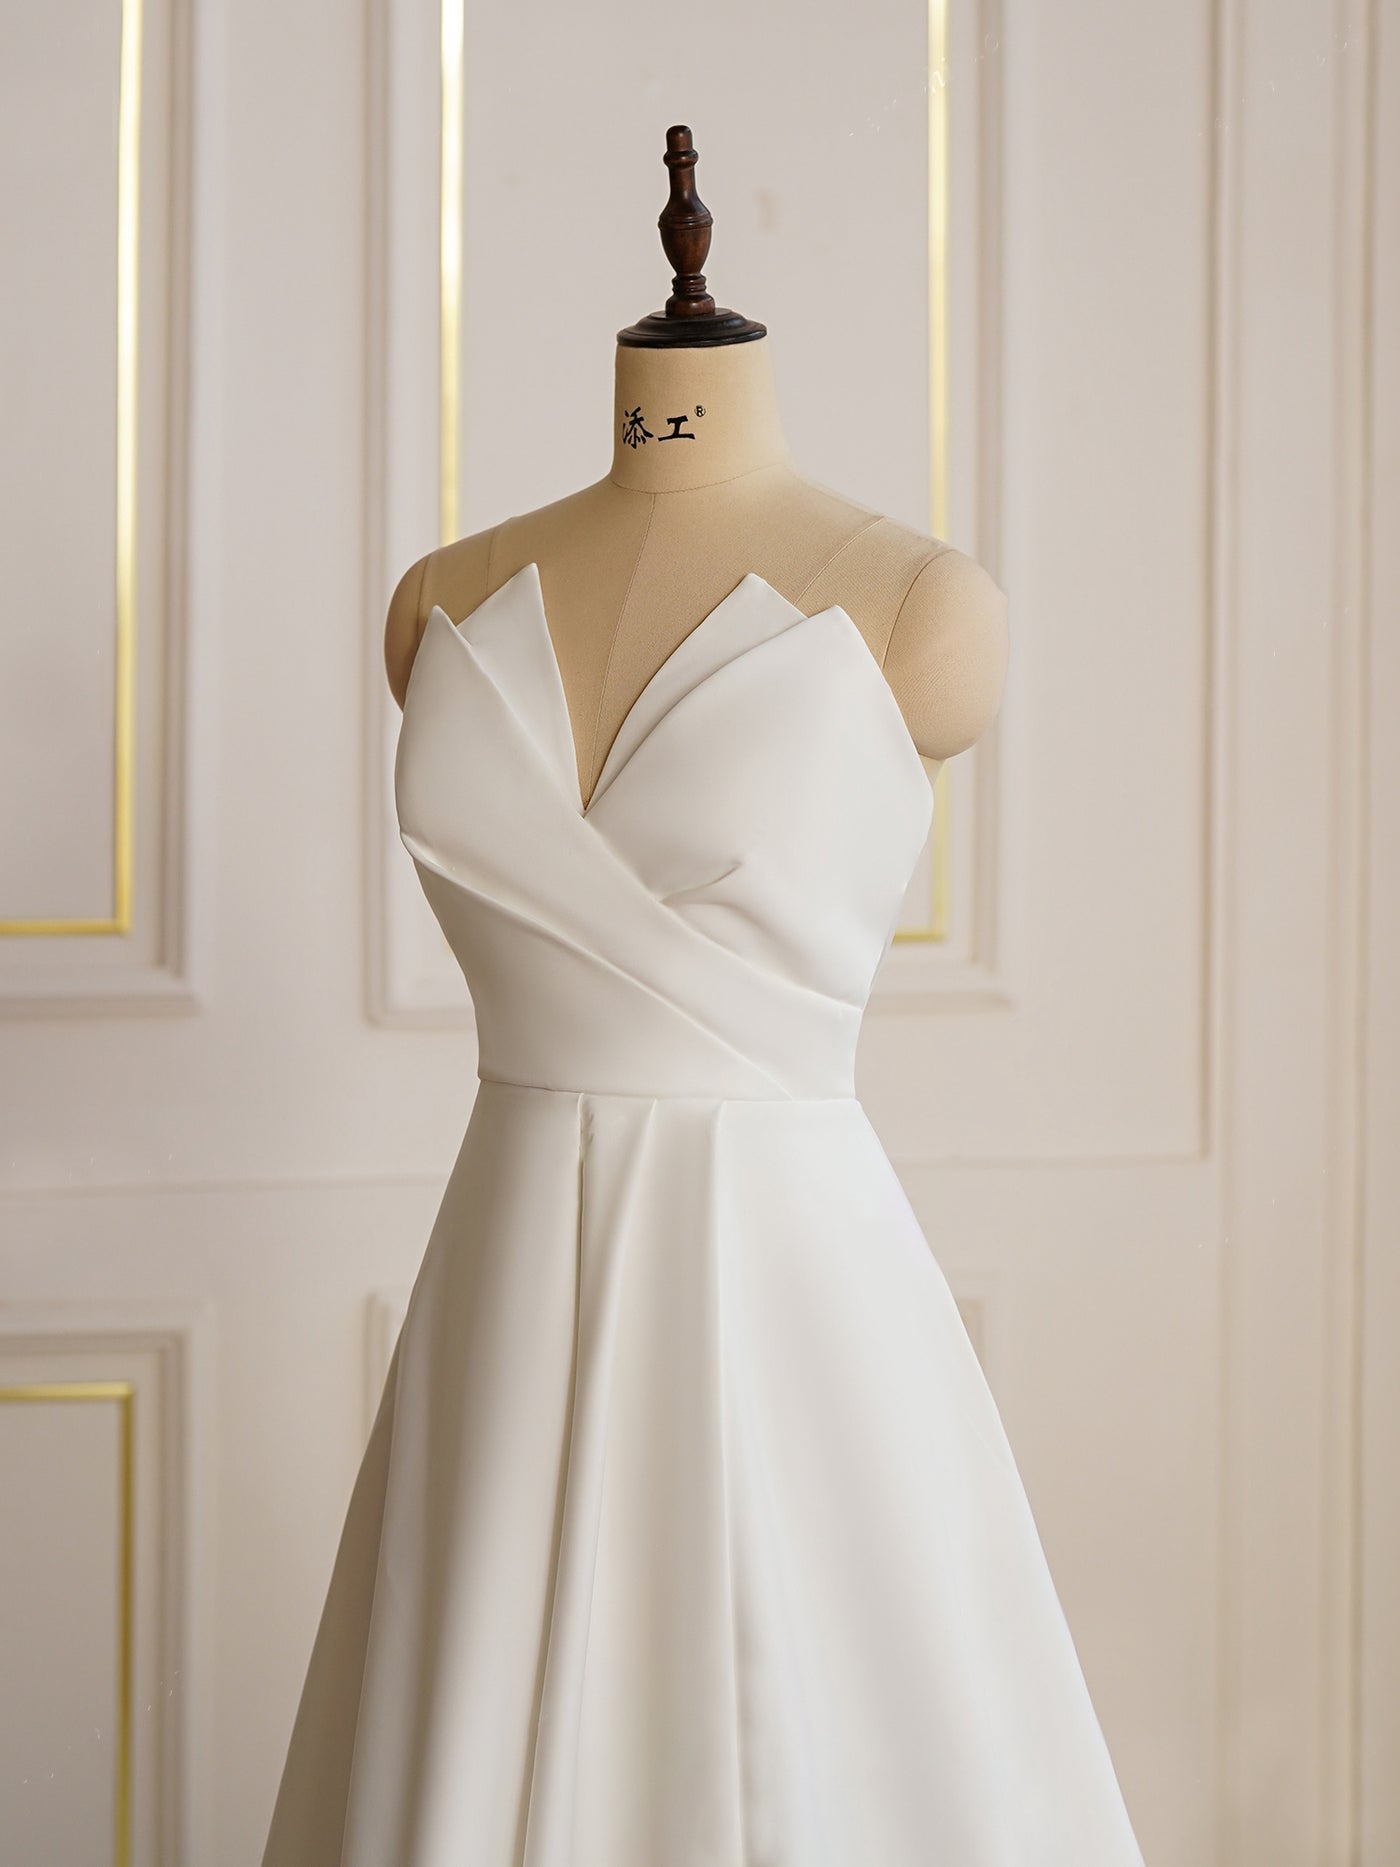 A Bergamot Bridal Modern Satin A-line Wedding Dress with Slit is displayed on a mannequin dummy in a bridal shop.